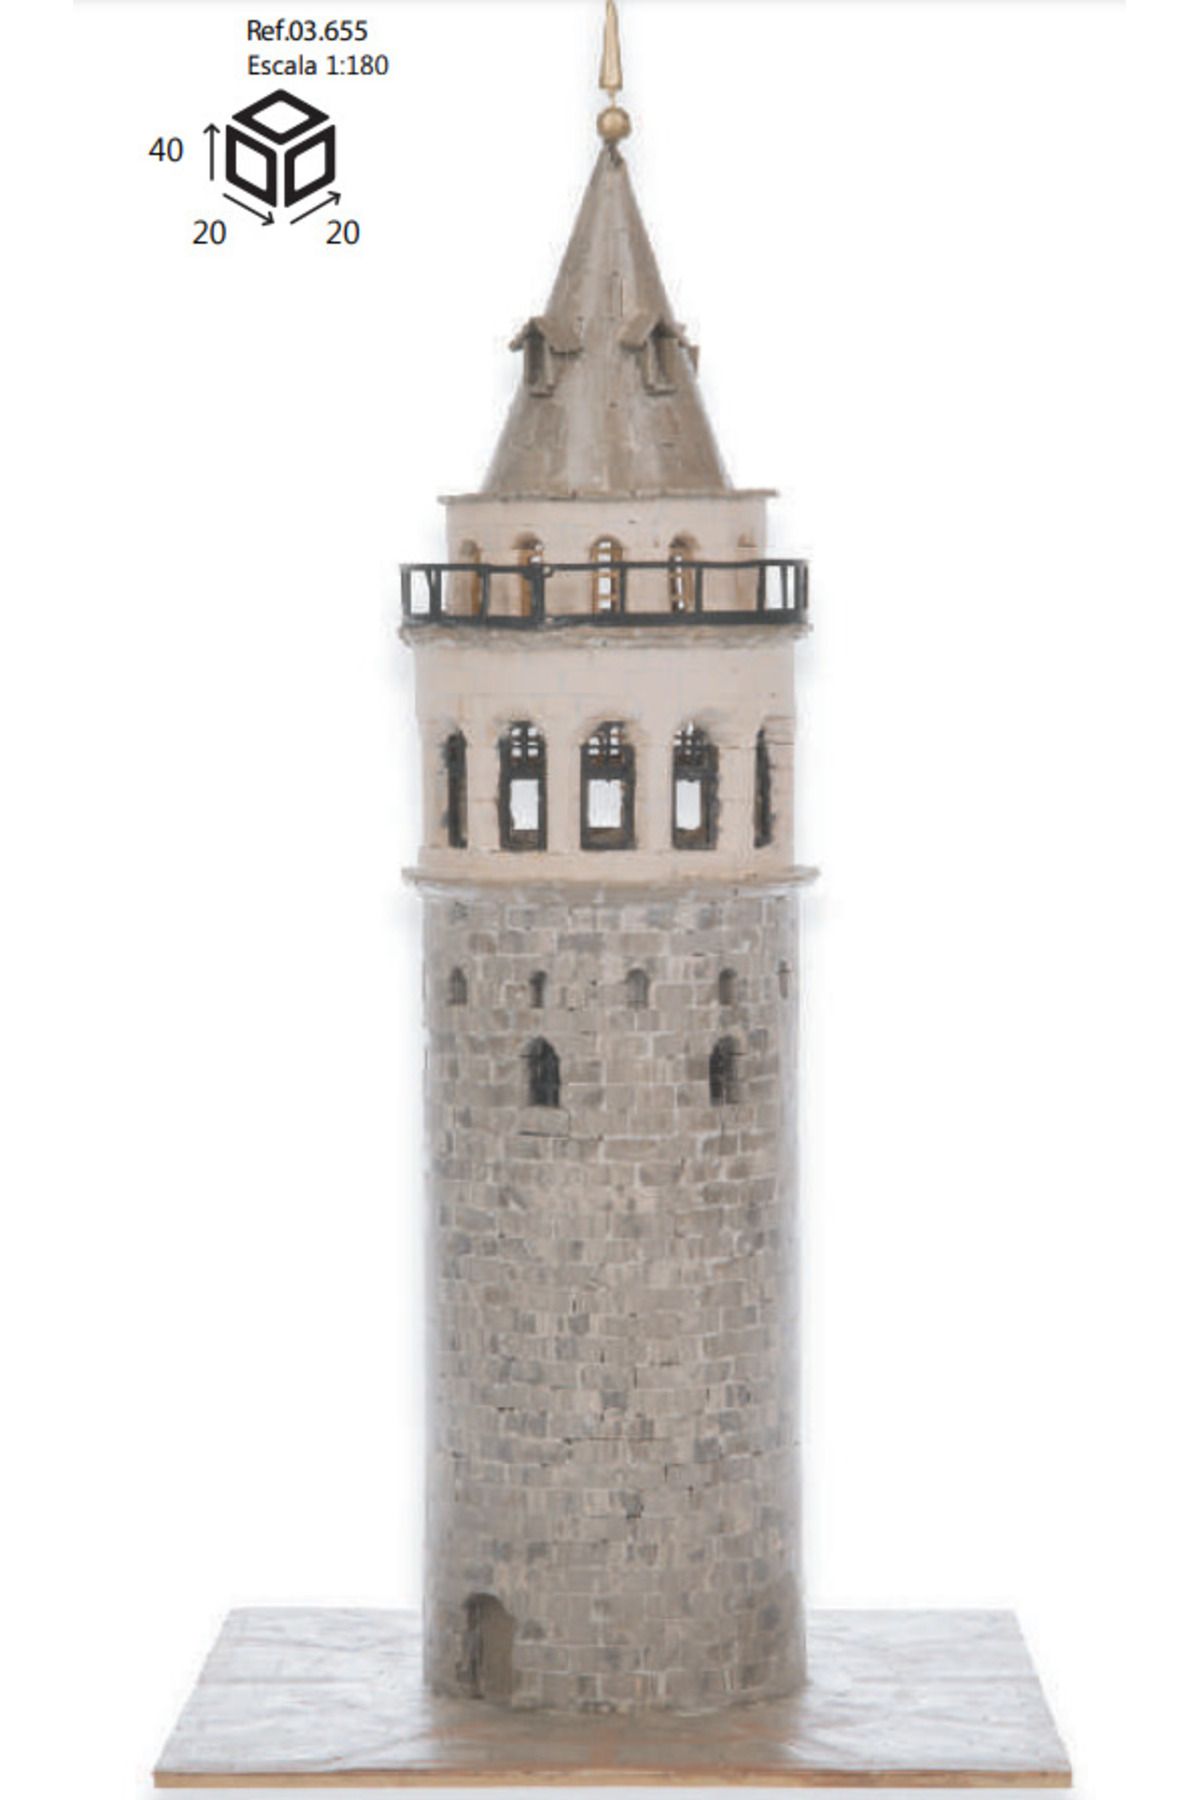 Domenech Taş Maket Galata Kulesi 1180 N03655